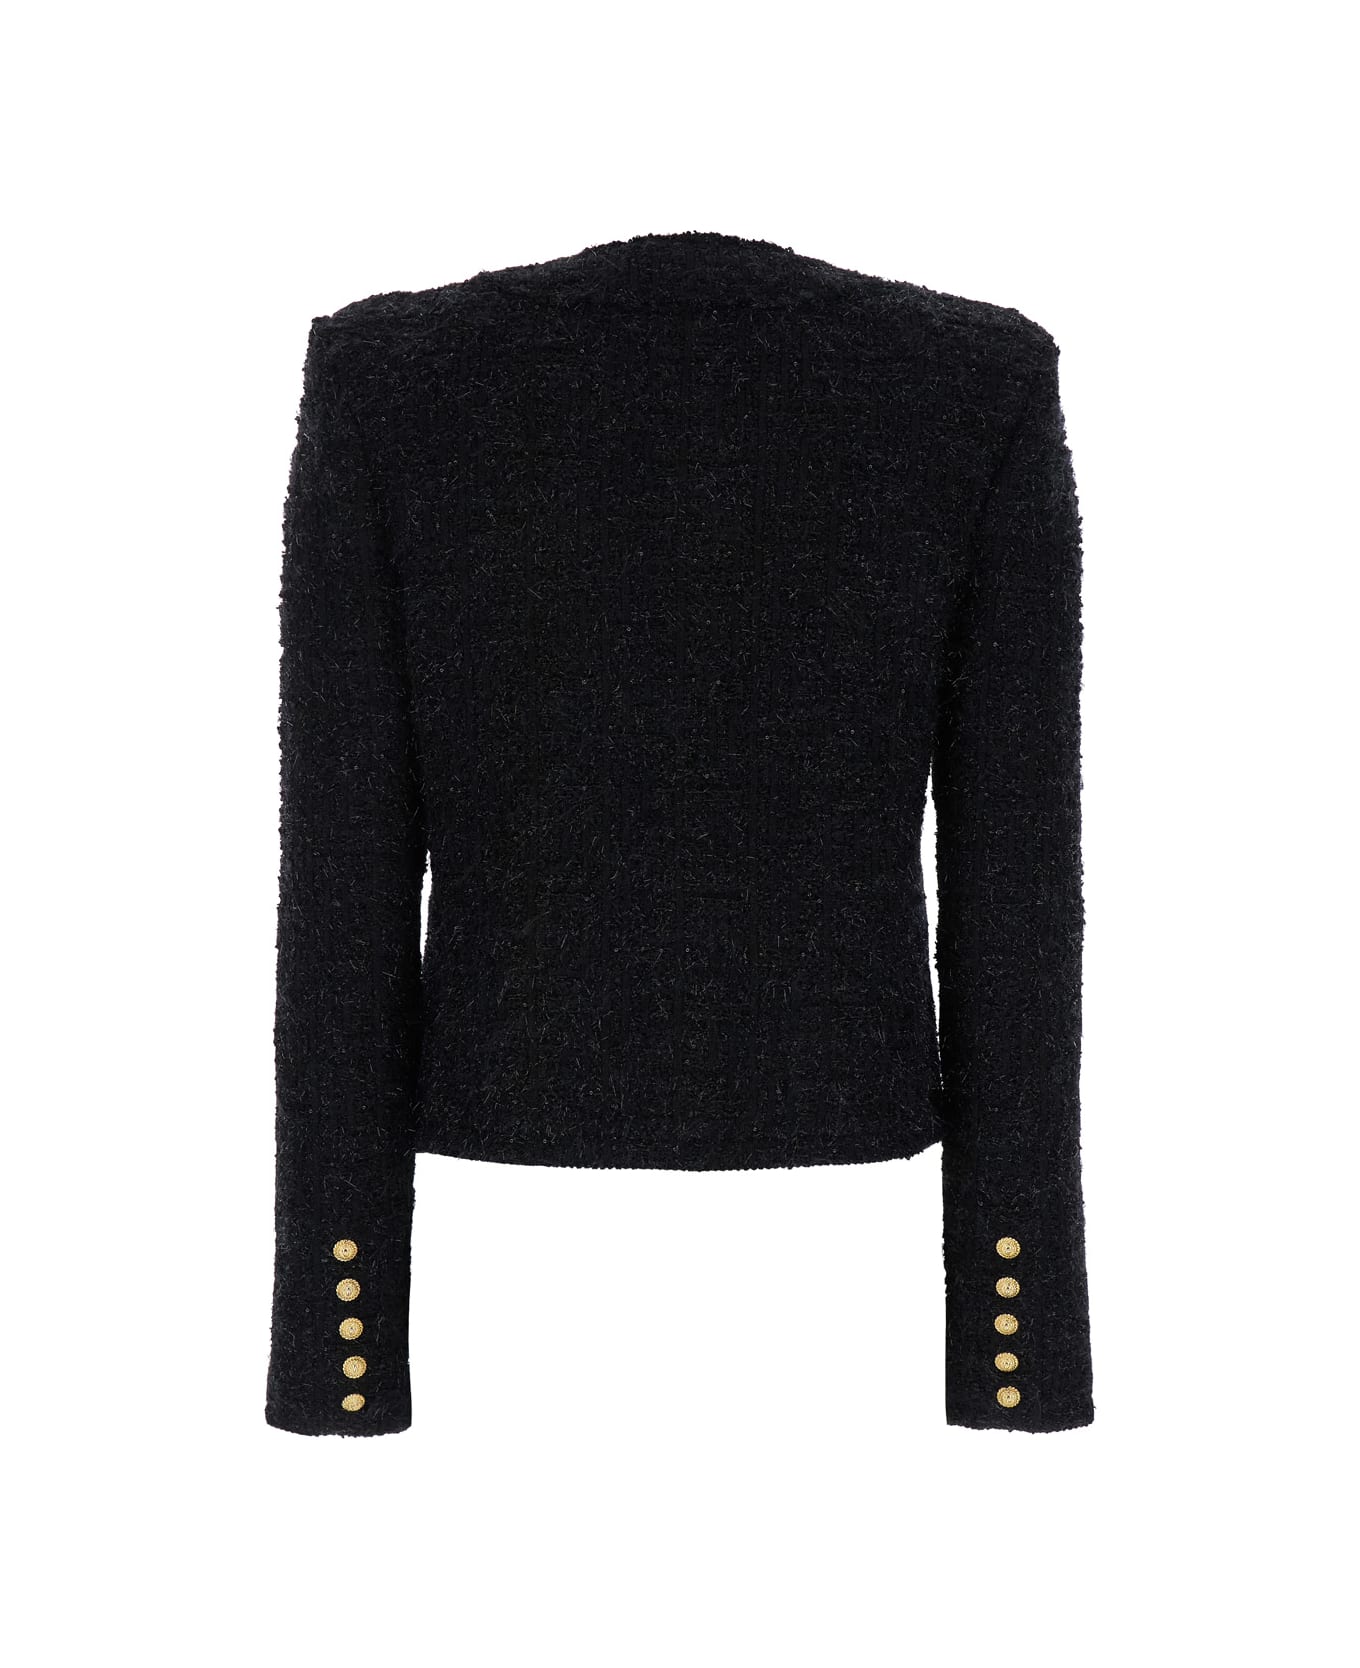 Balmain 'miami' Black Collarless Jacket With Jewel Buttons In Tweed Woman - Black カーディガン